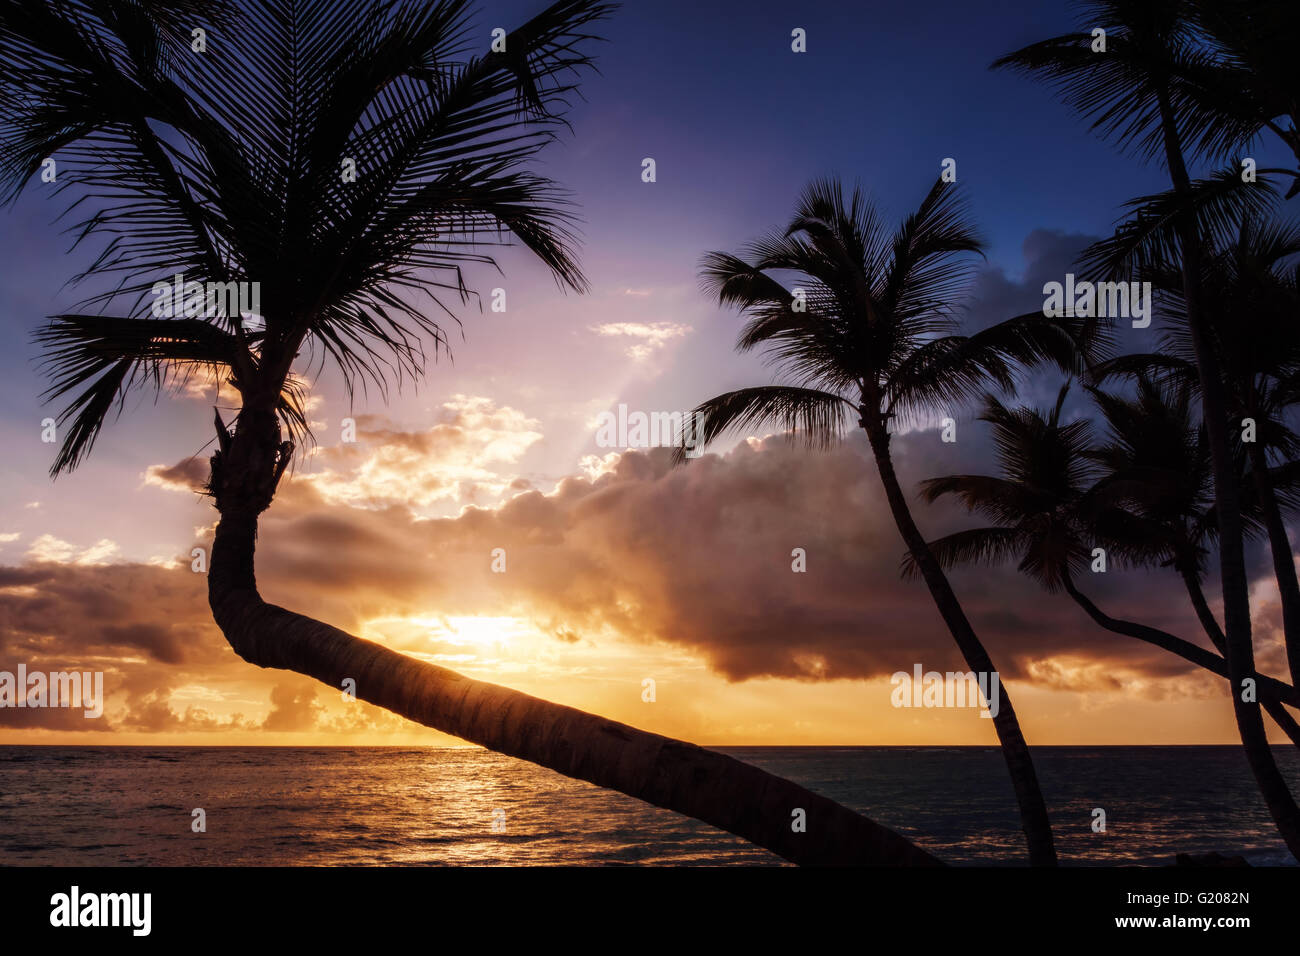 Palmen am Sonnenaufgang oder am Sonnenuntergang am karibischen Meer. Stockfoto